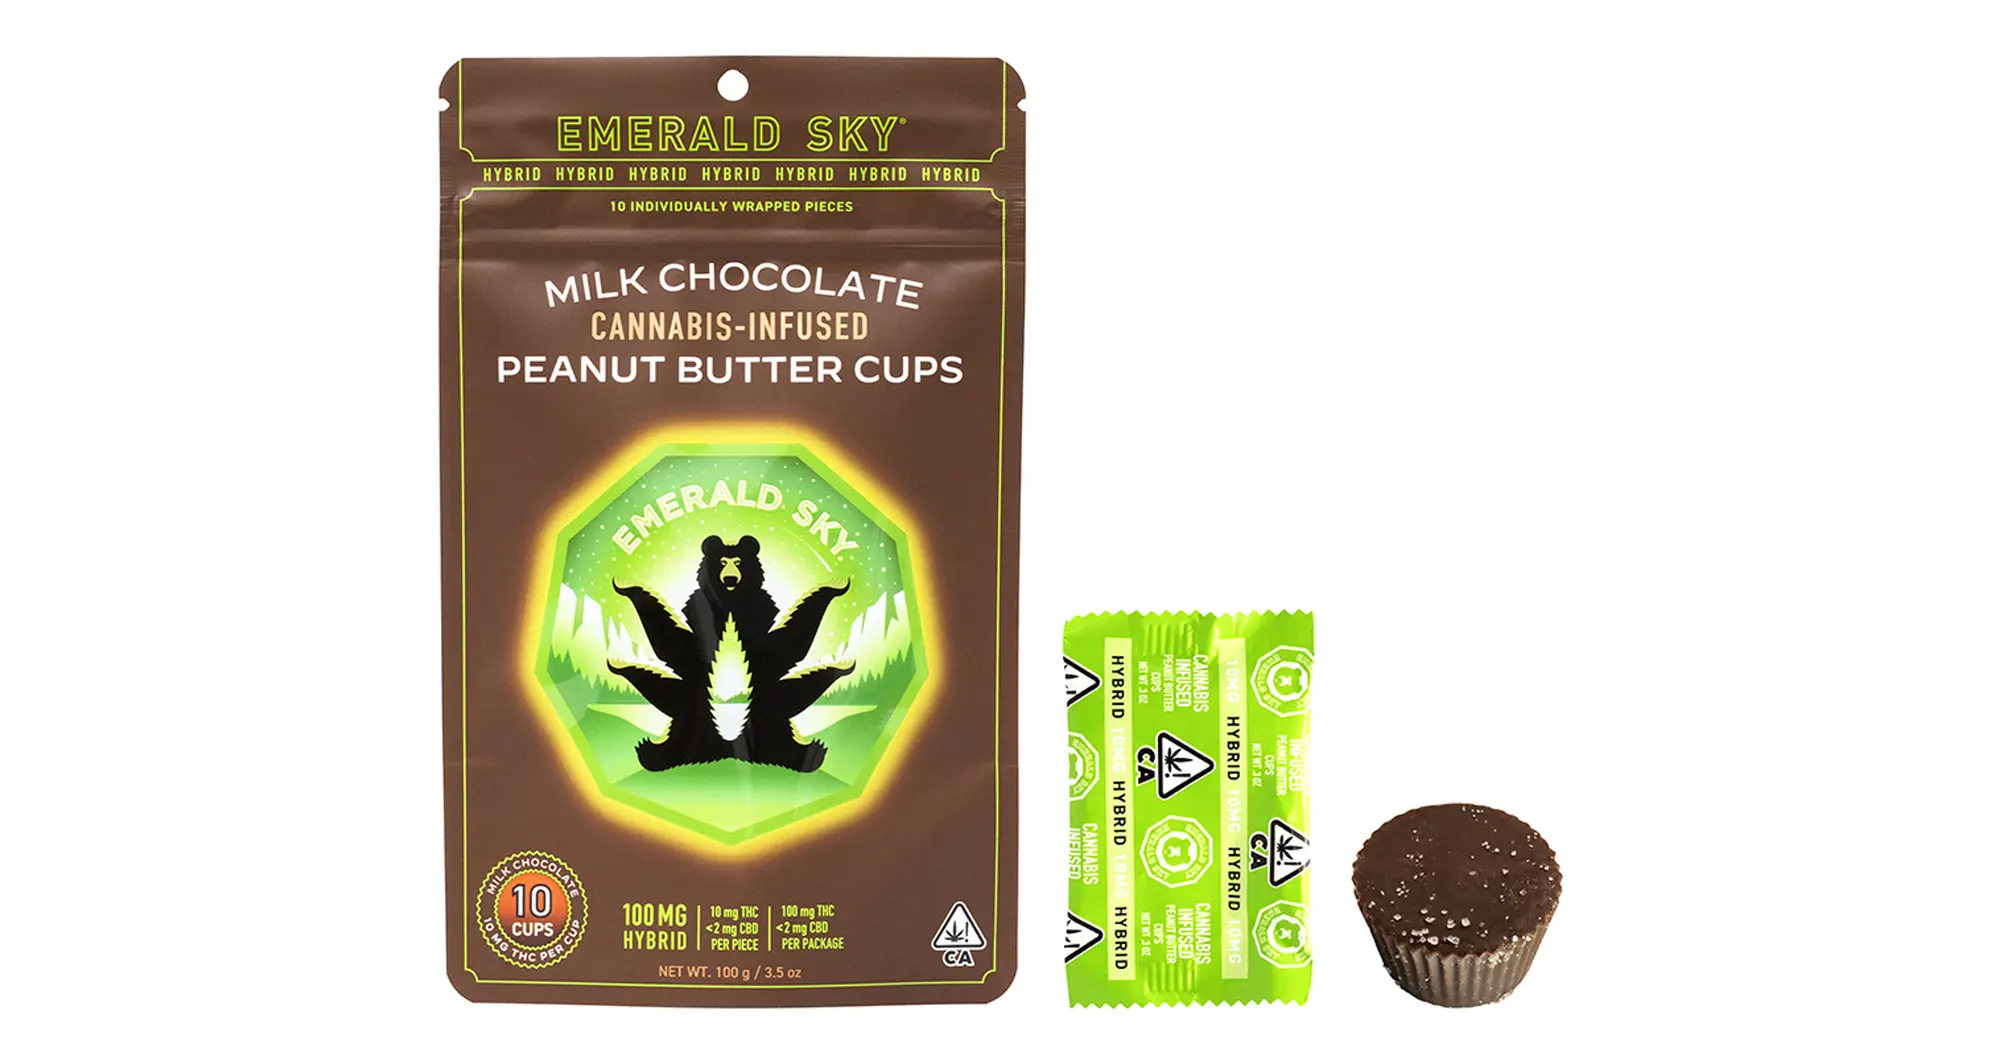 Hybrid 10mg Milk Chocolate Peanut Butter Cups